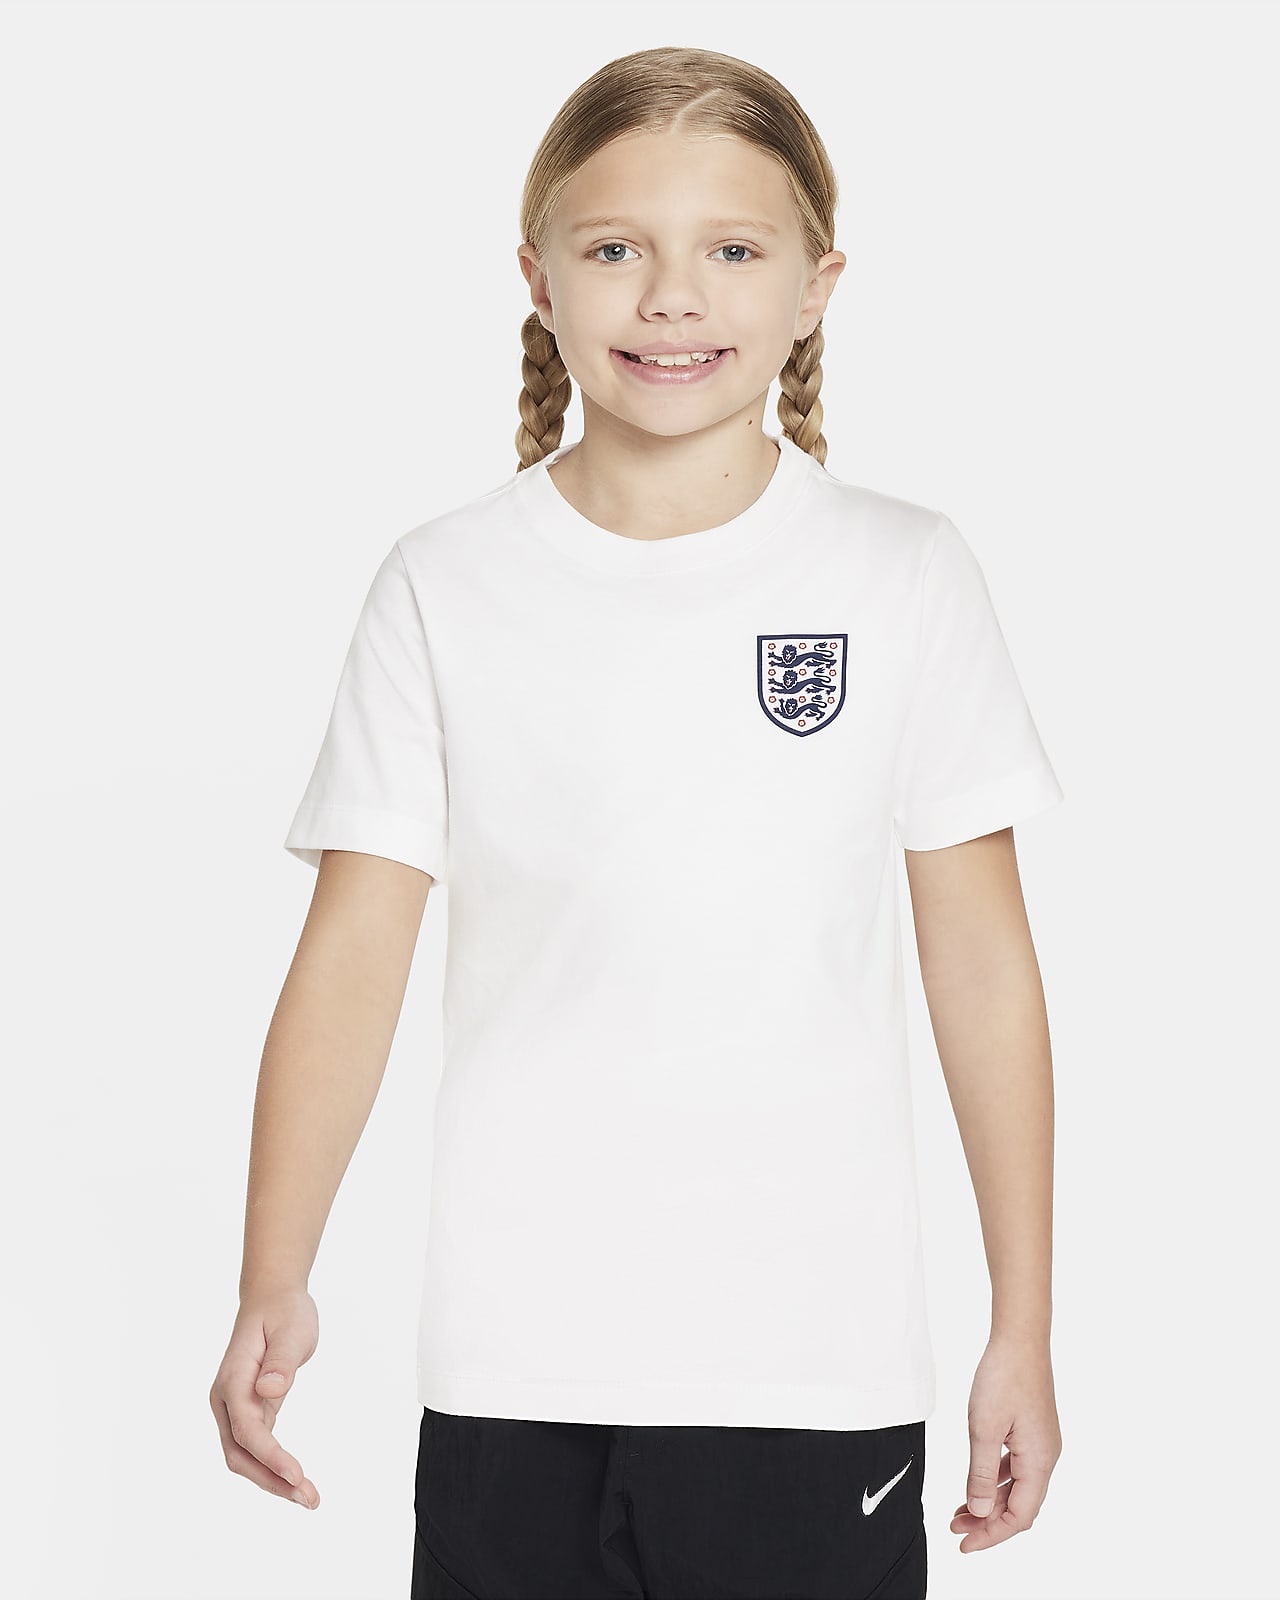 T-shirt Nike Football Angleterre pour ado